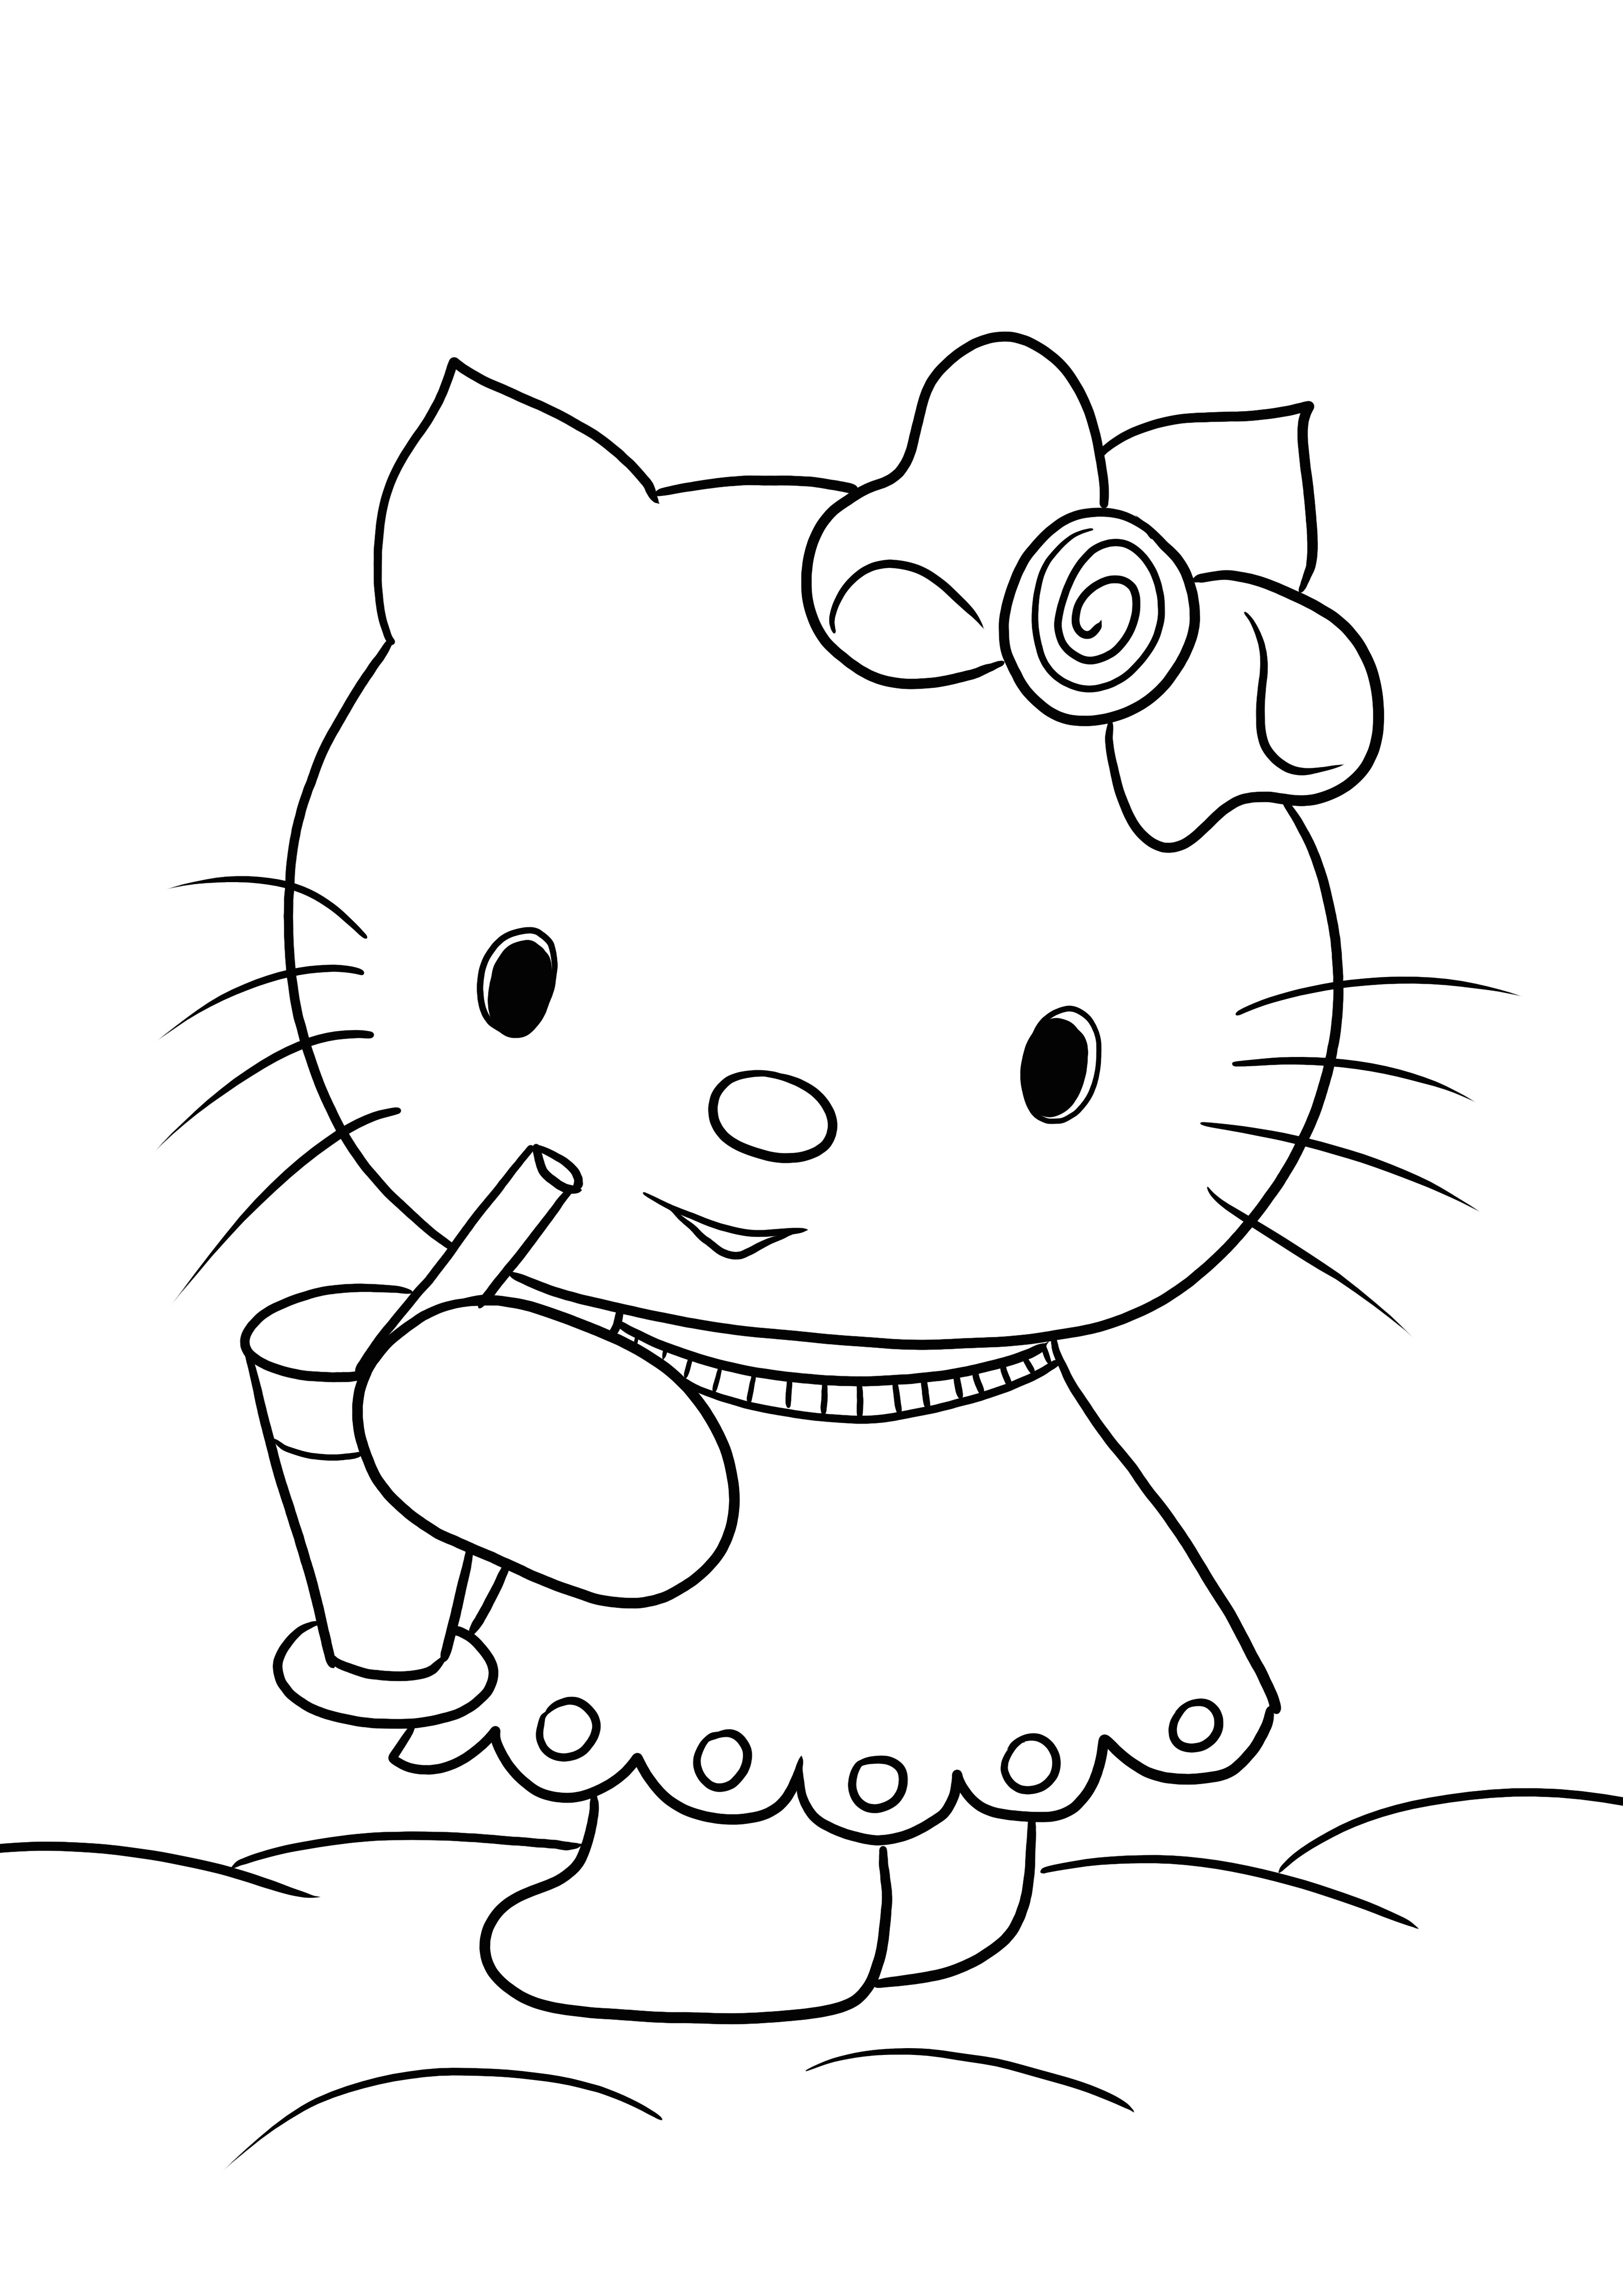 Hello Kitty drinks her favorite lemonade-free printable for coloring for kids